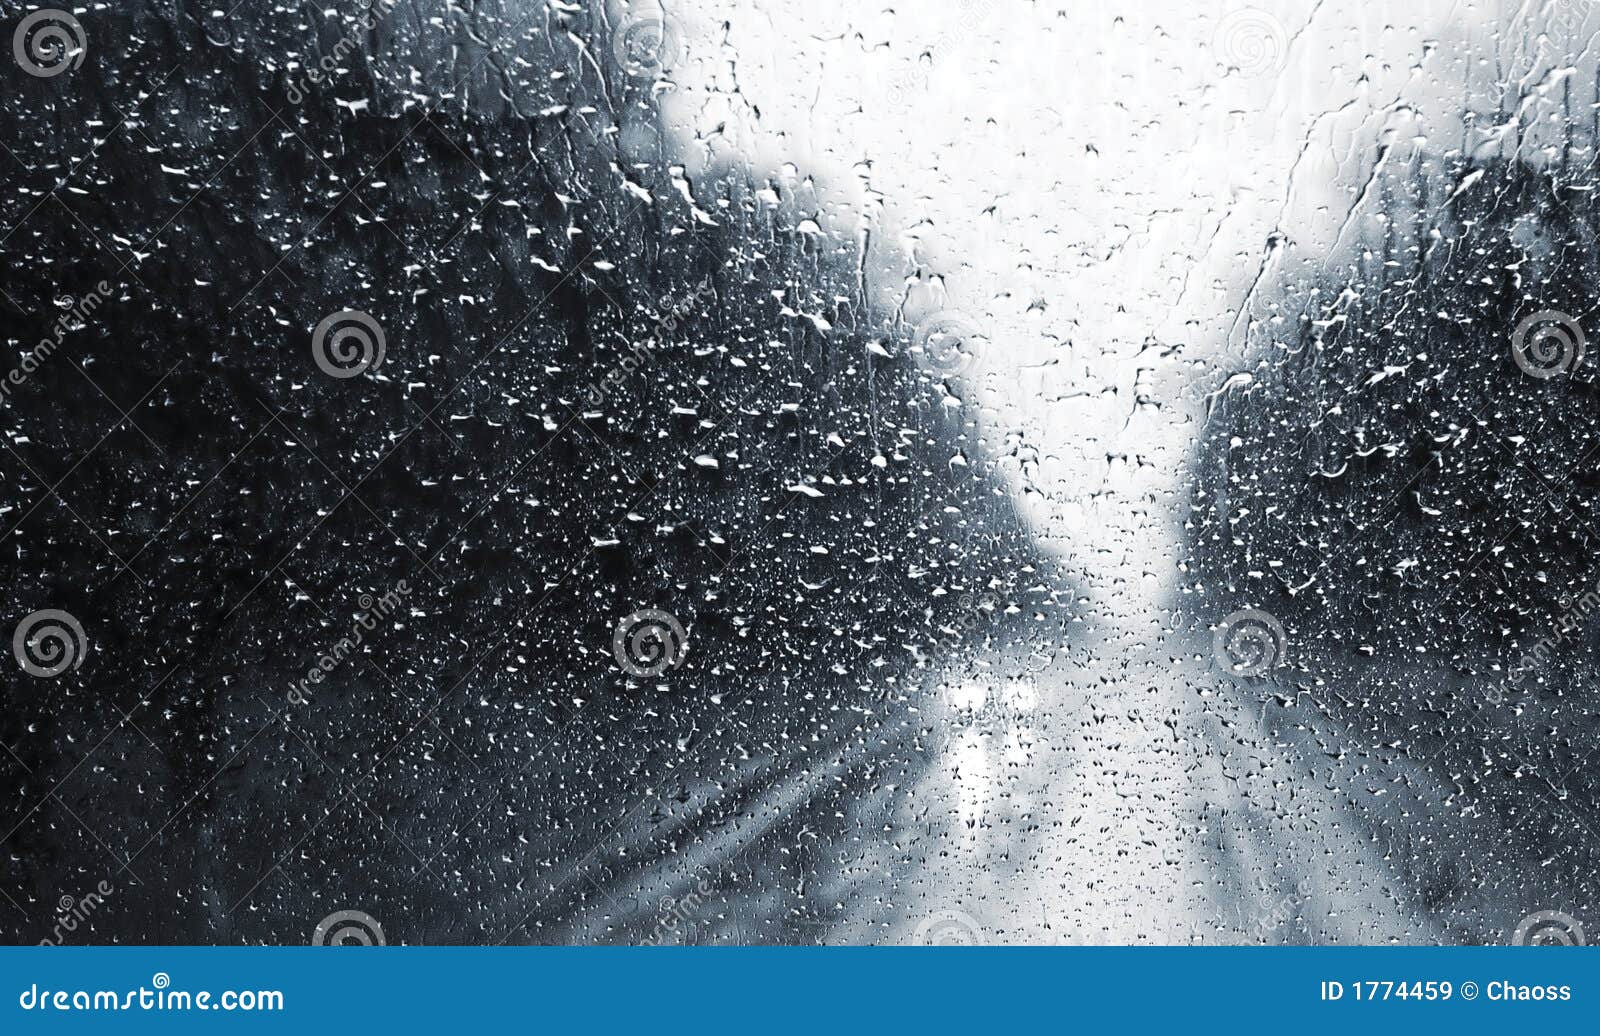 rain-car-window-1774459.jpg